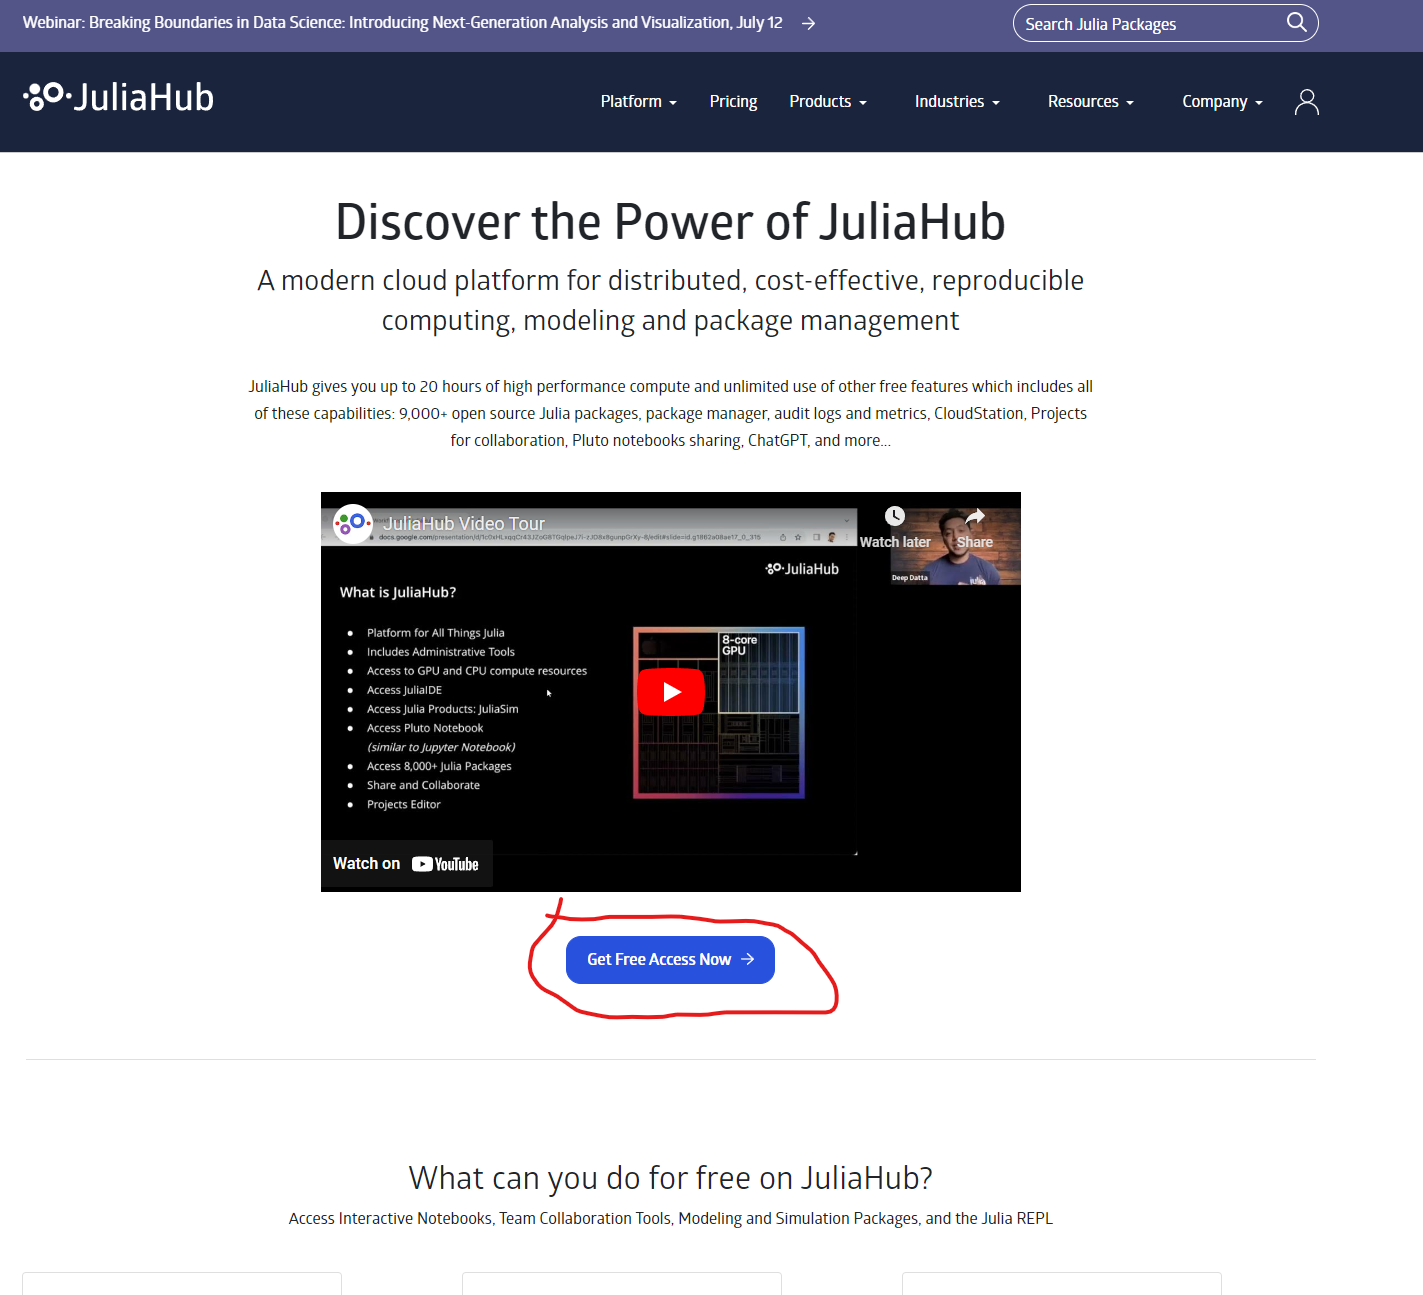 The JuliaHub free tier explained